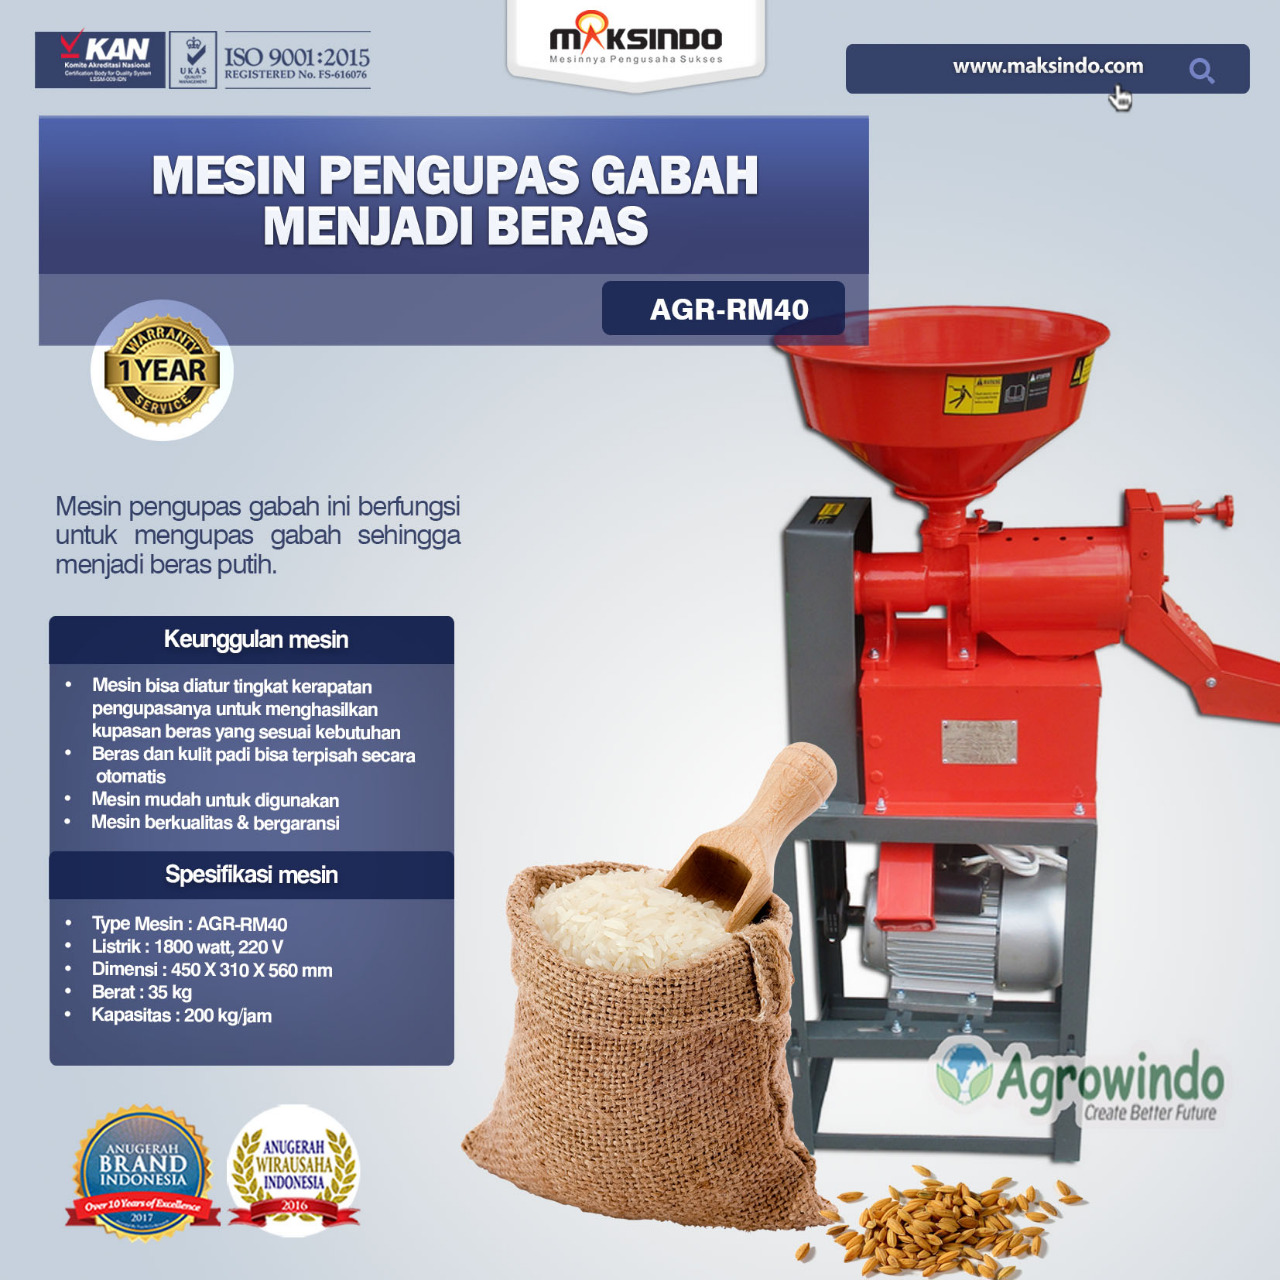 Jual Mesin Rice Huller Mini Pengupas Gabah – Beras AGR-RM40 di Malang